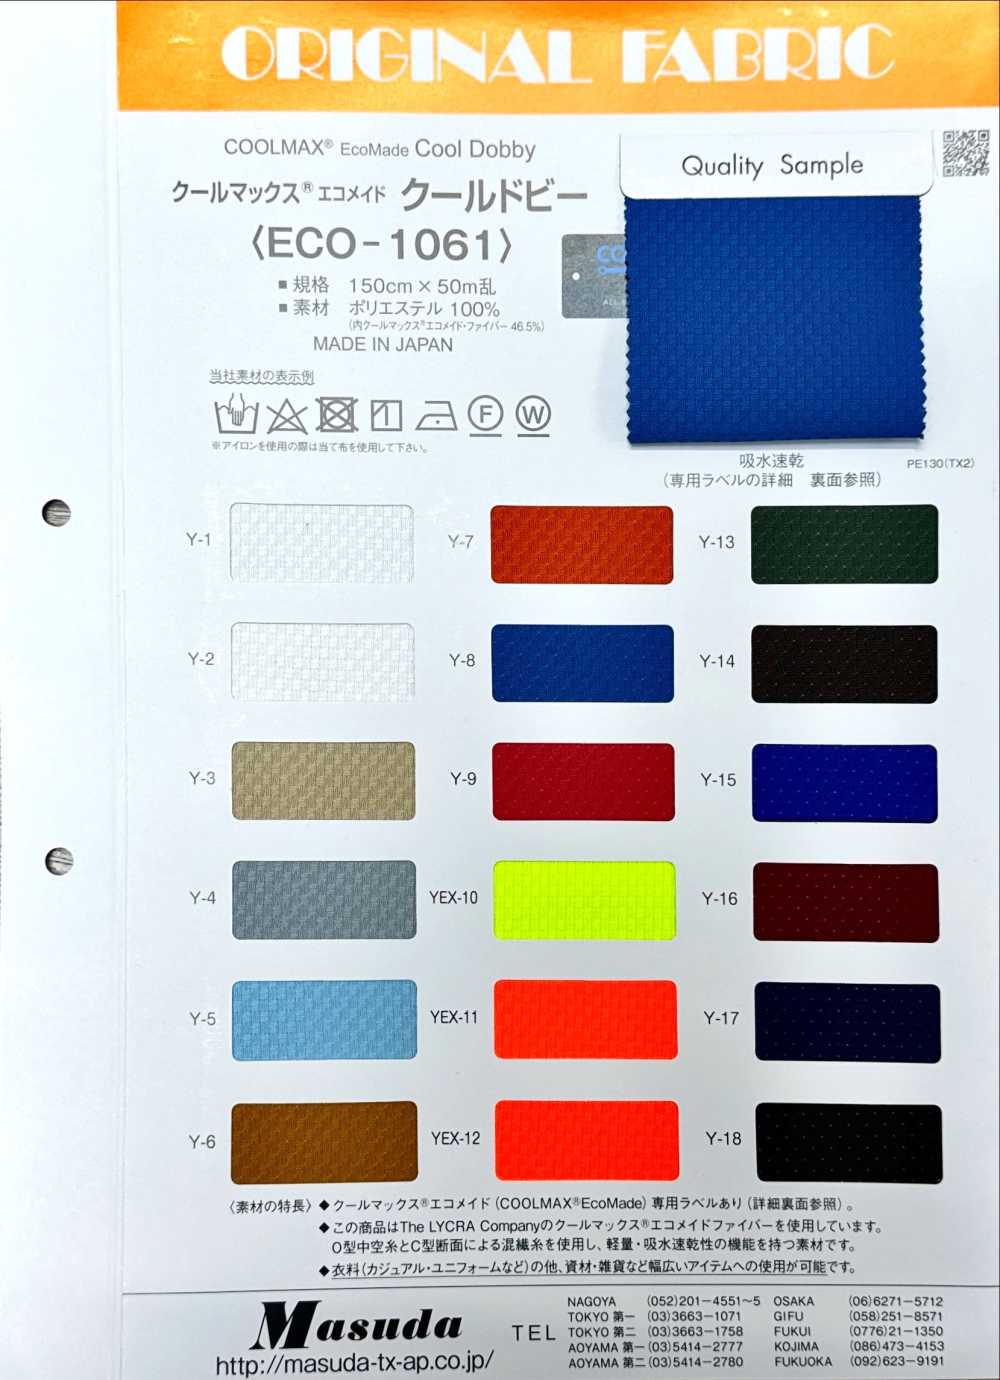 ECO-1061 Coolmax® Ecomade Cool Dobby[Textile / Fabric] Masuda